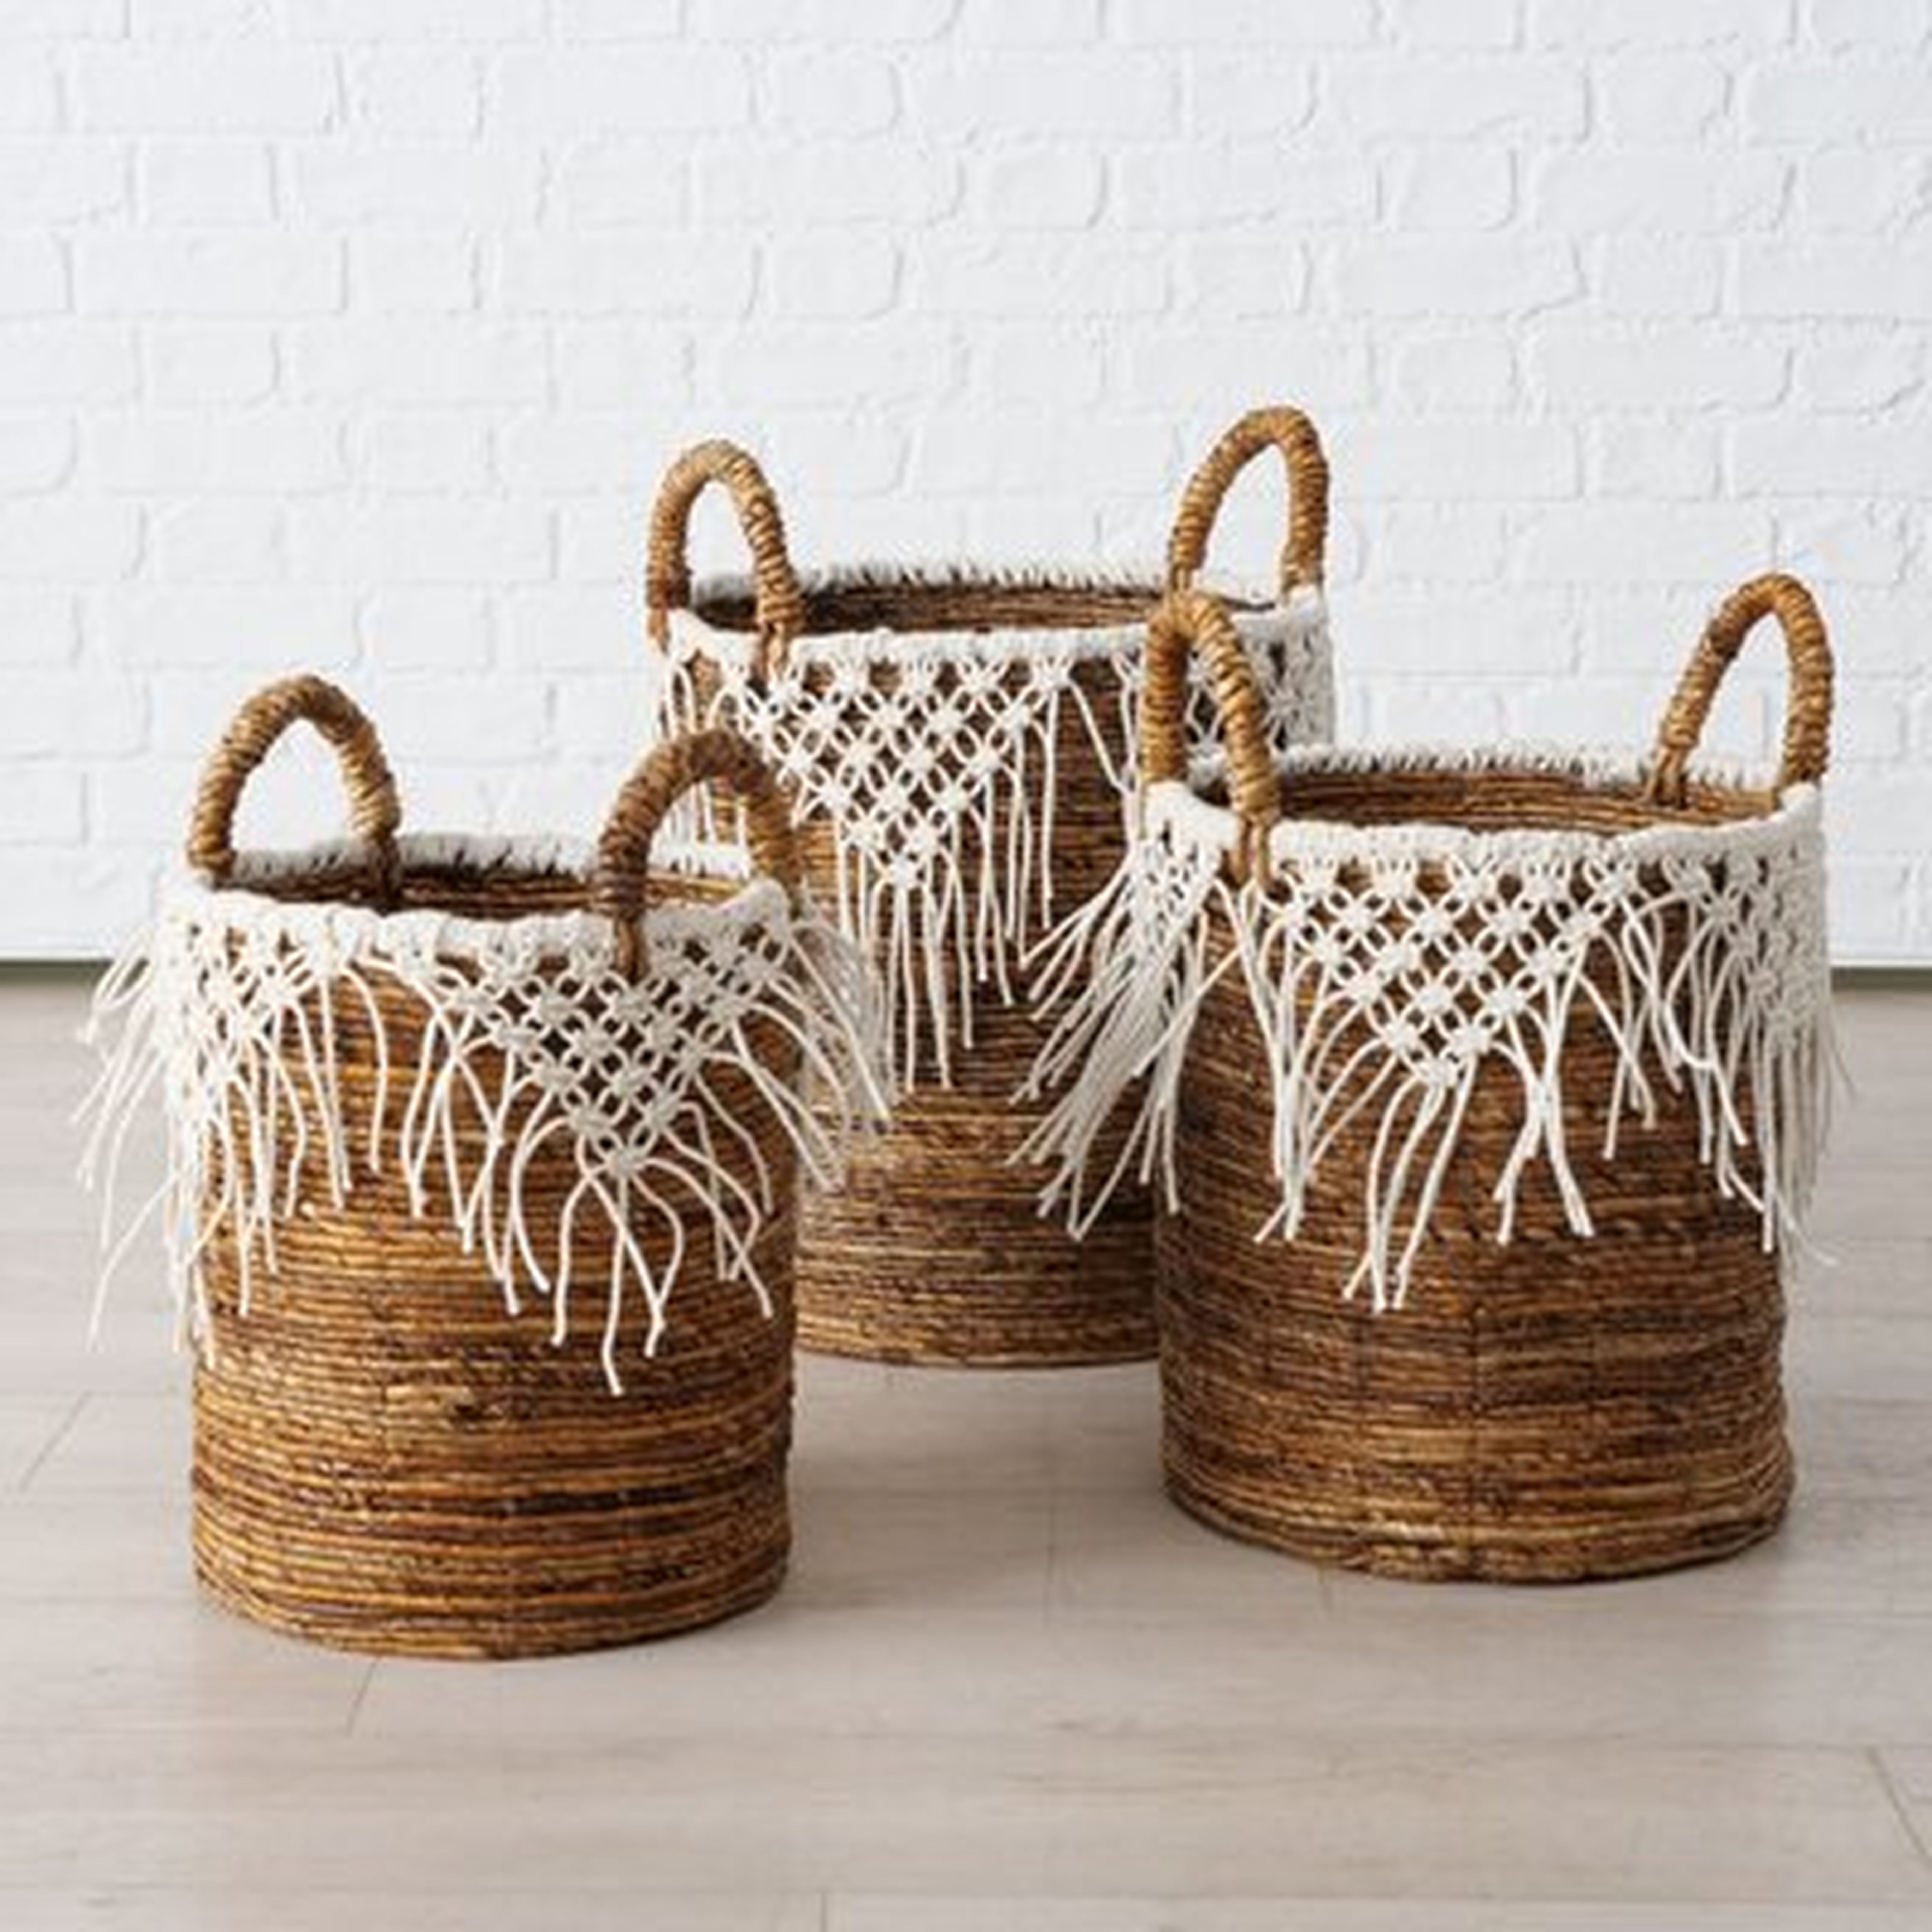 3 Piece Wicker Basket Set - Wayfair